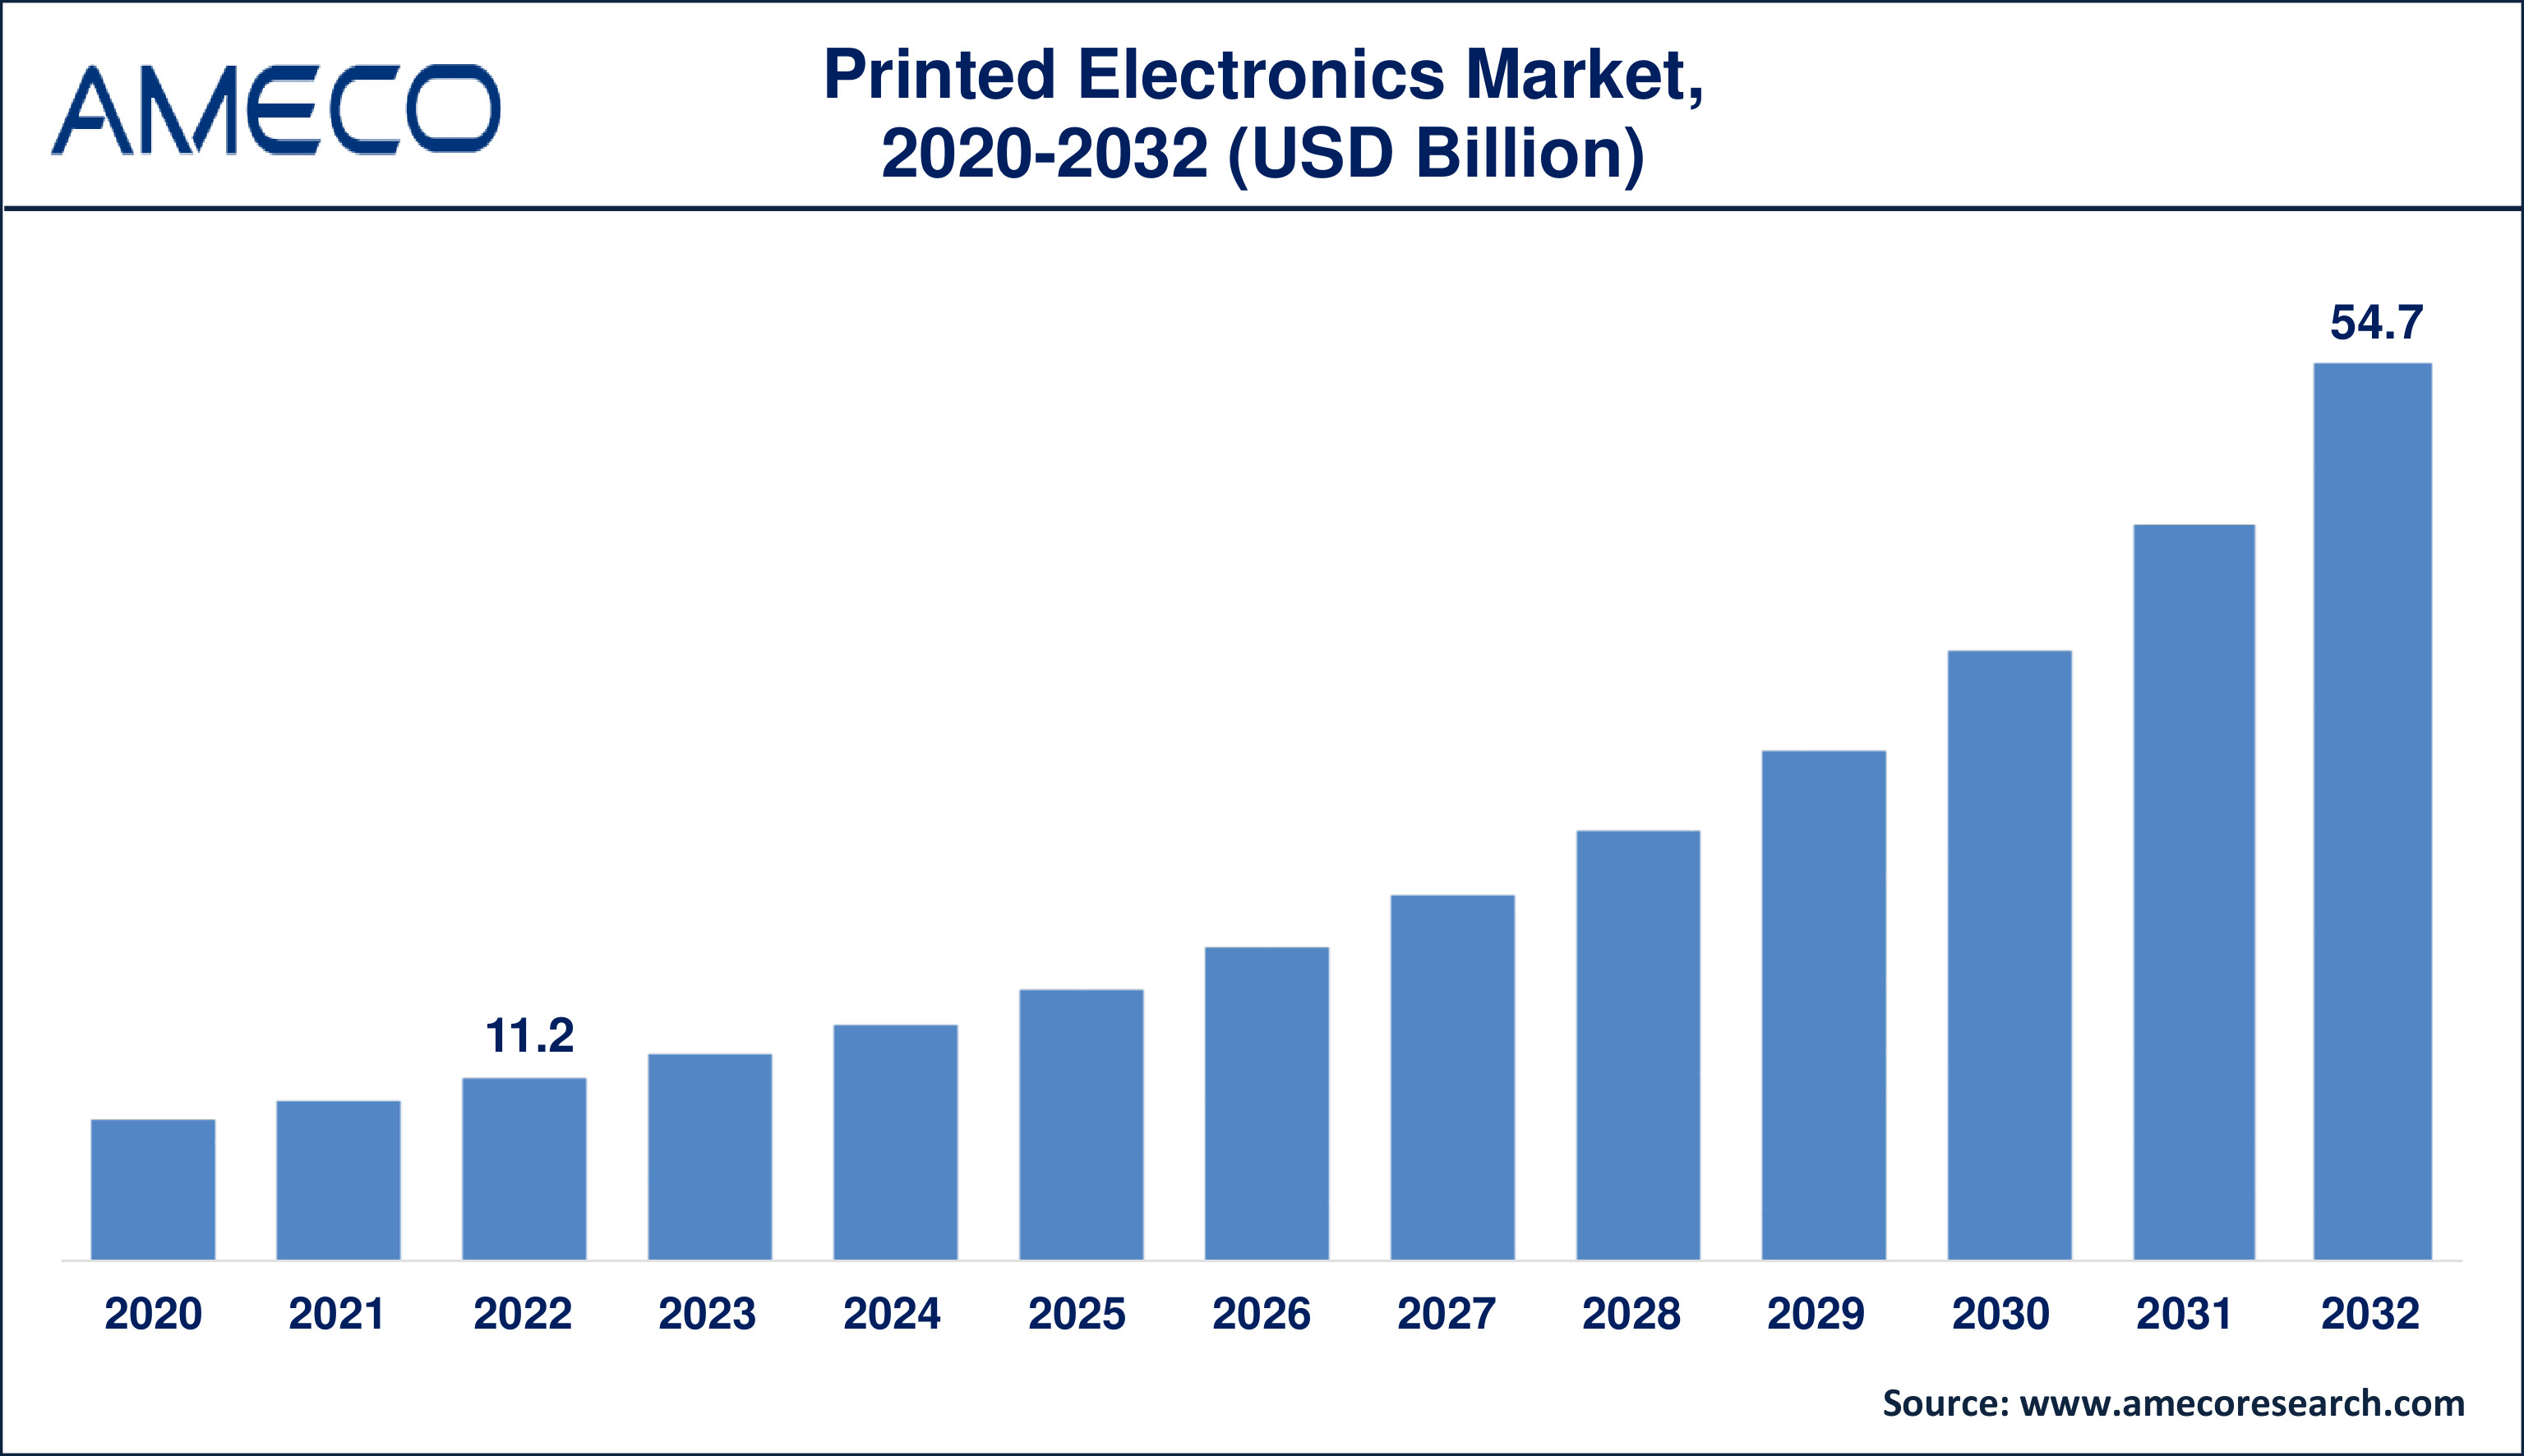 Printed Electronics Market Dynamics